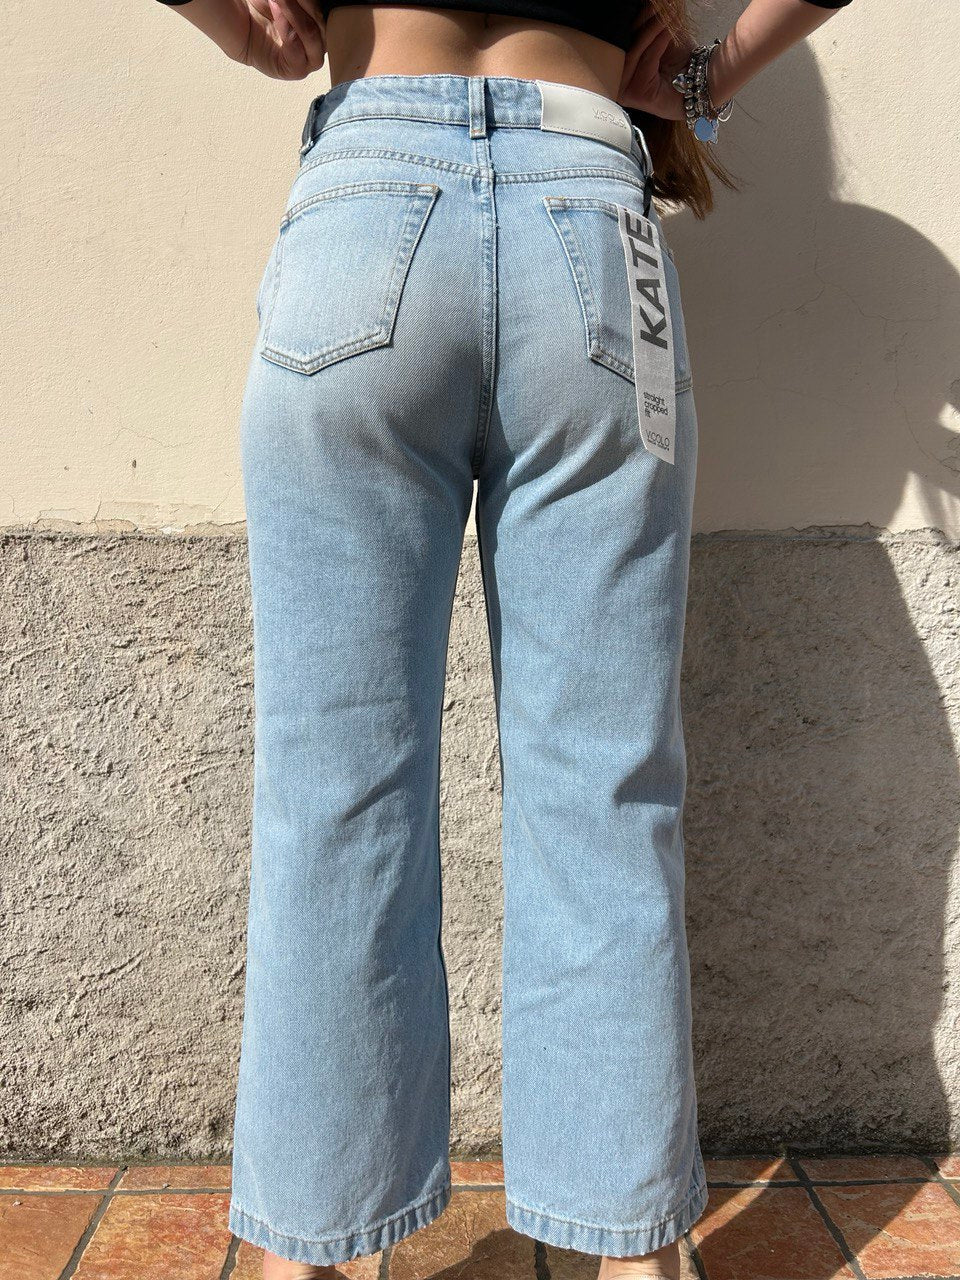 Jeans Kate rotture sul fondo